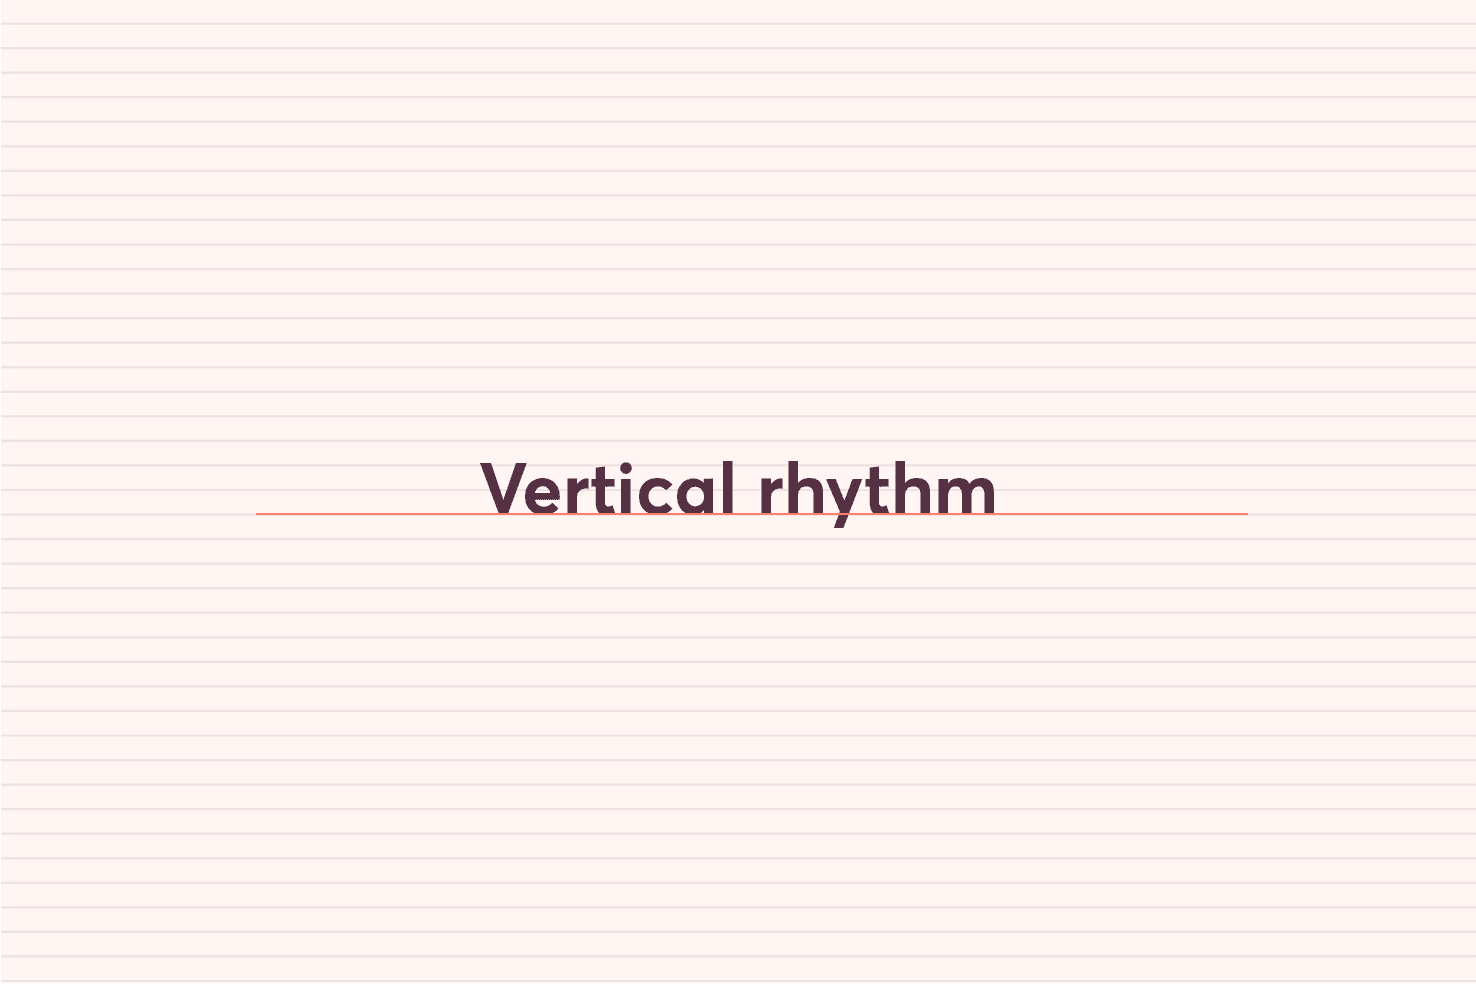 Image demonstrating vertical rhythm